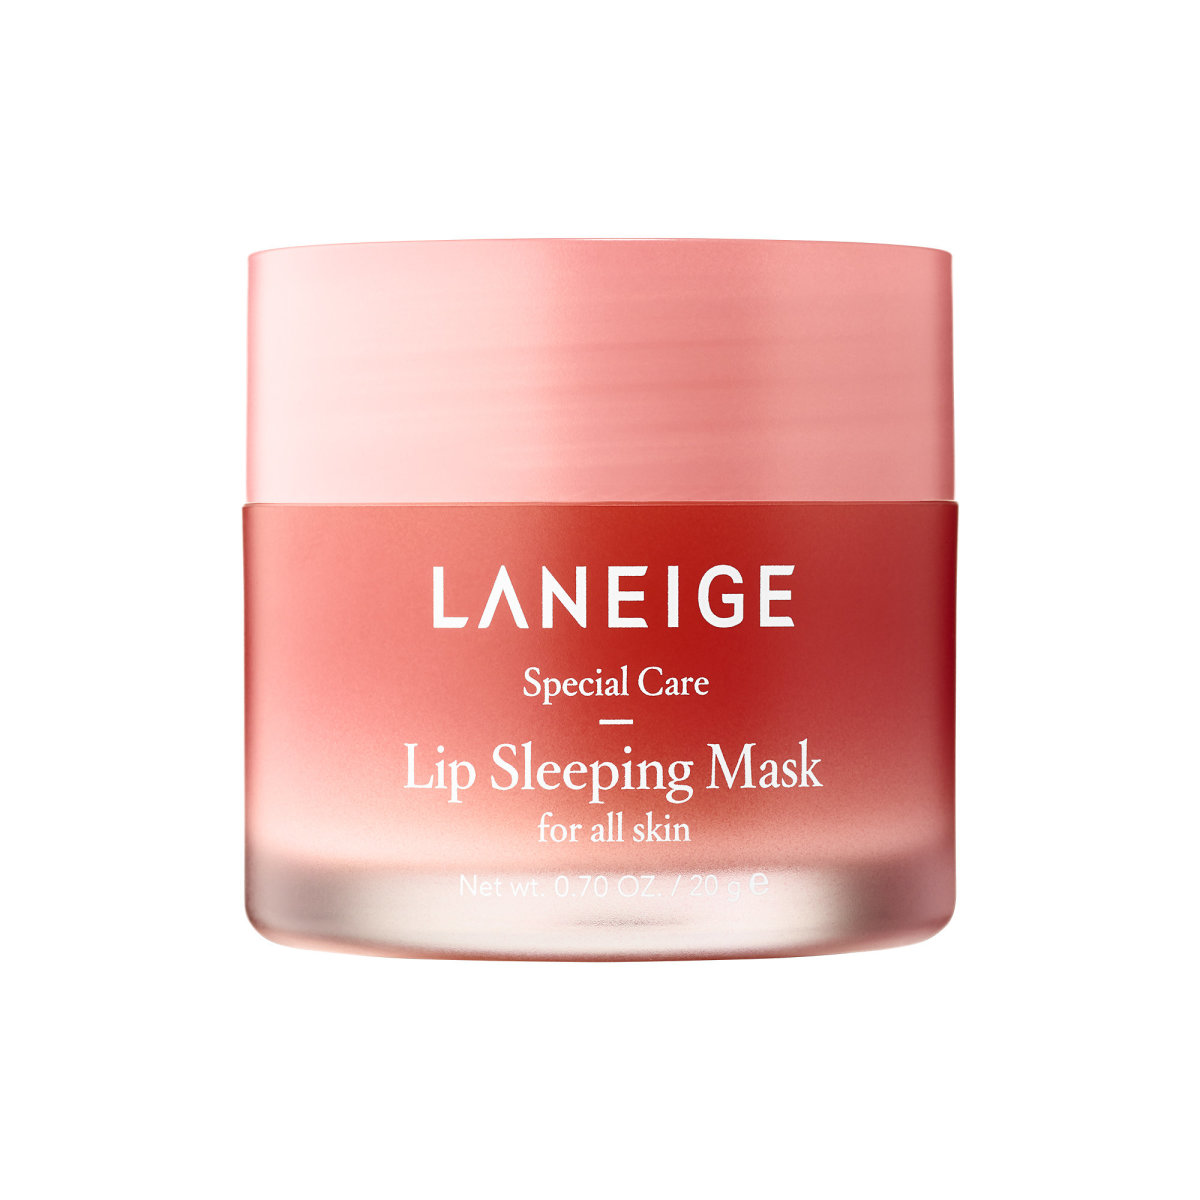 Laneige Lip Sleeping Mask, $20, available here.